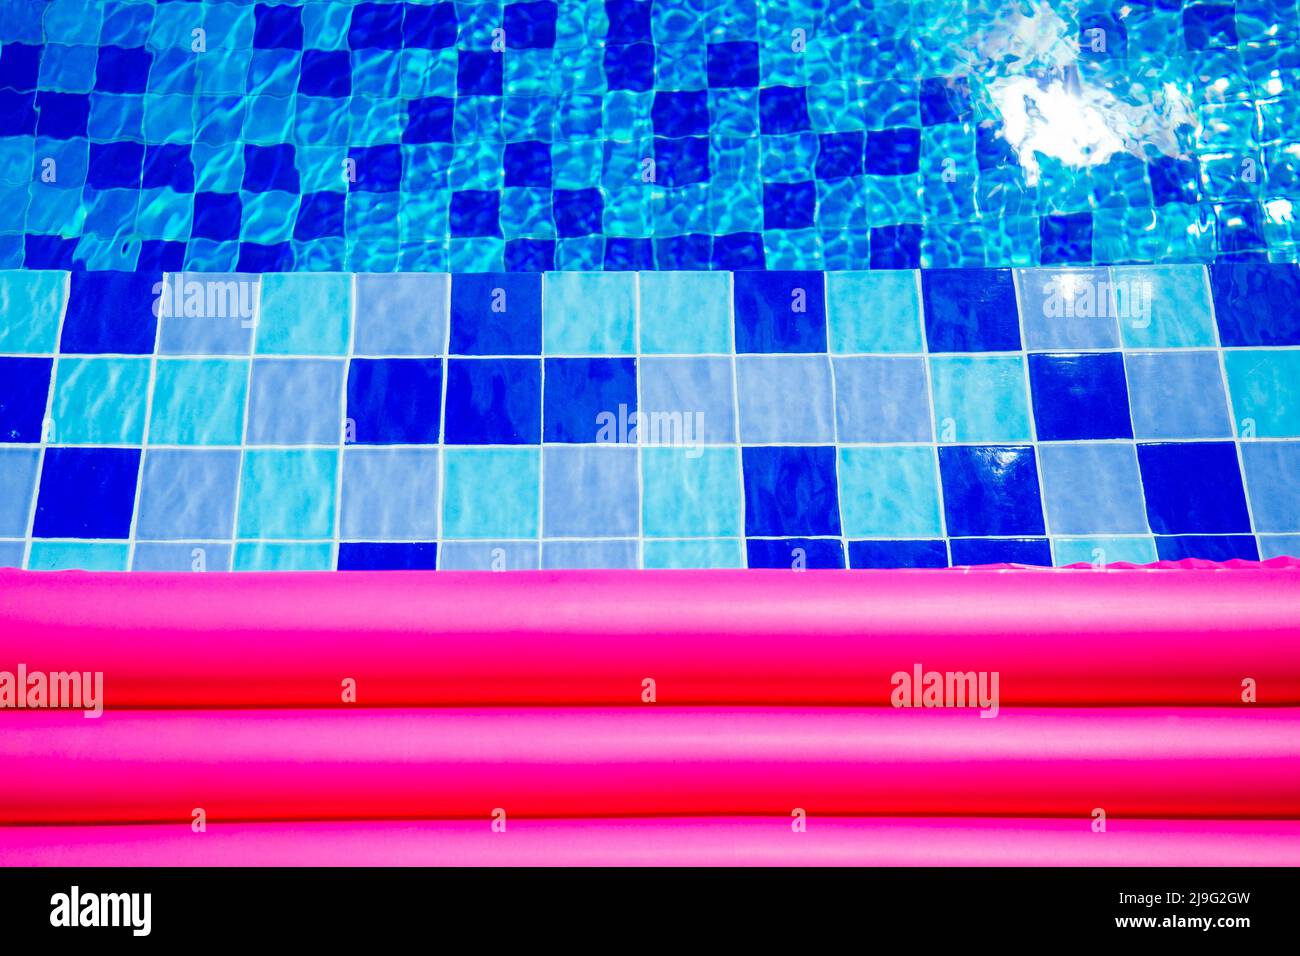 Pinke aufblasbare Matratze auf blau türkisfarbenem Wasser Swimmingpool Kopie Platz Stockfoto